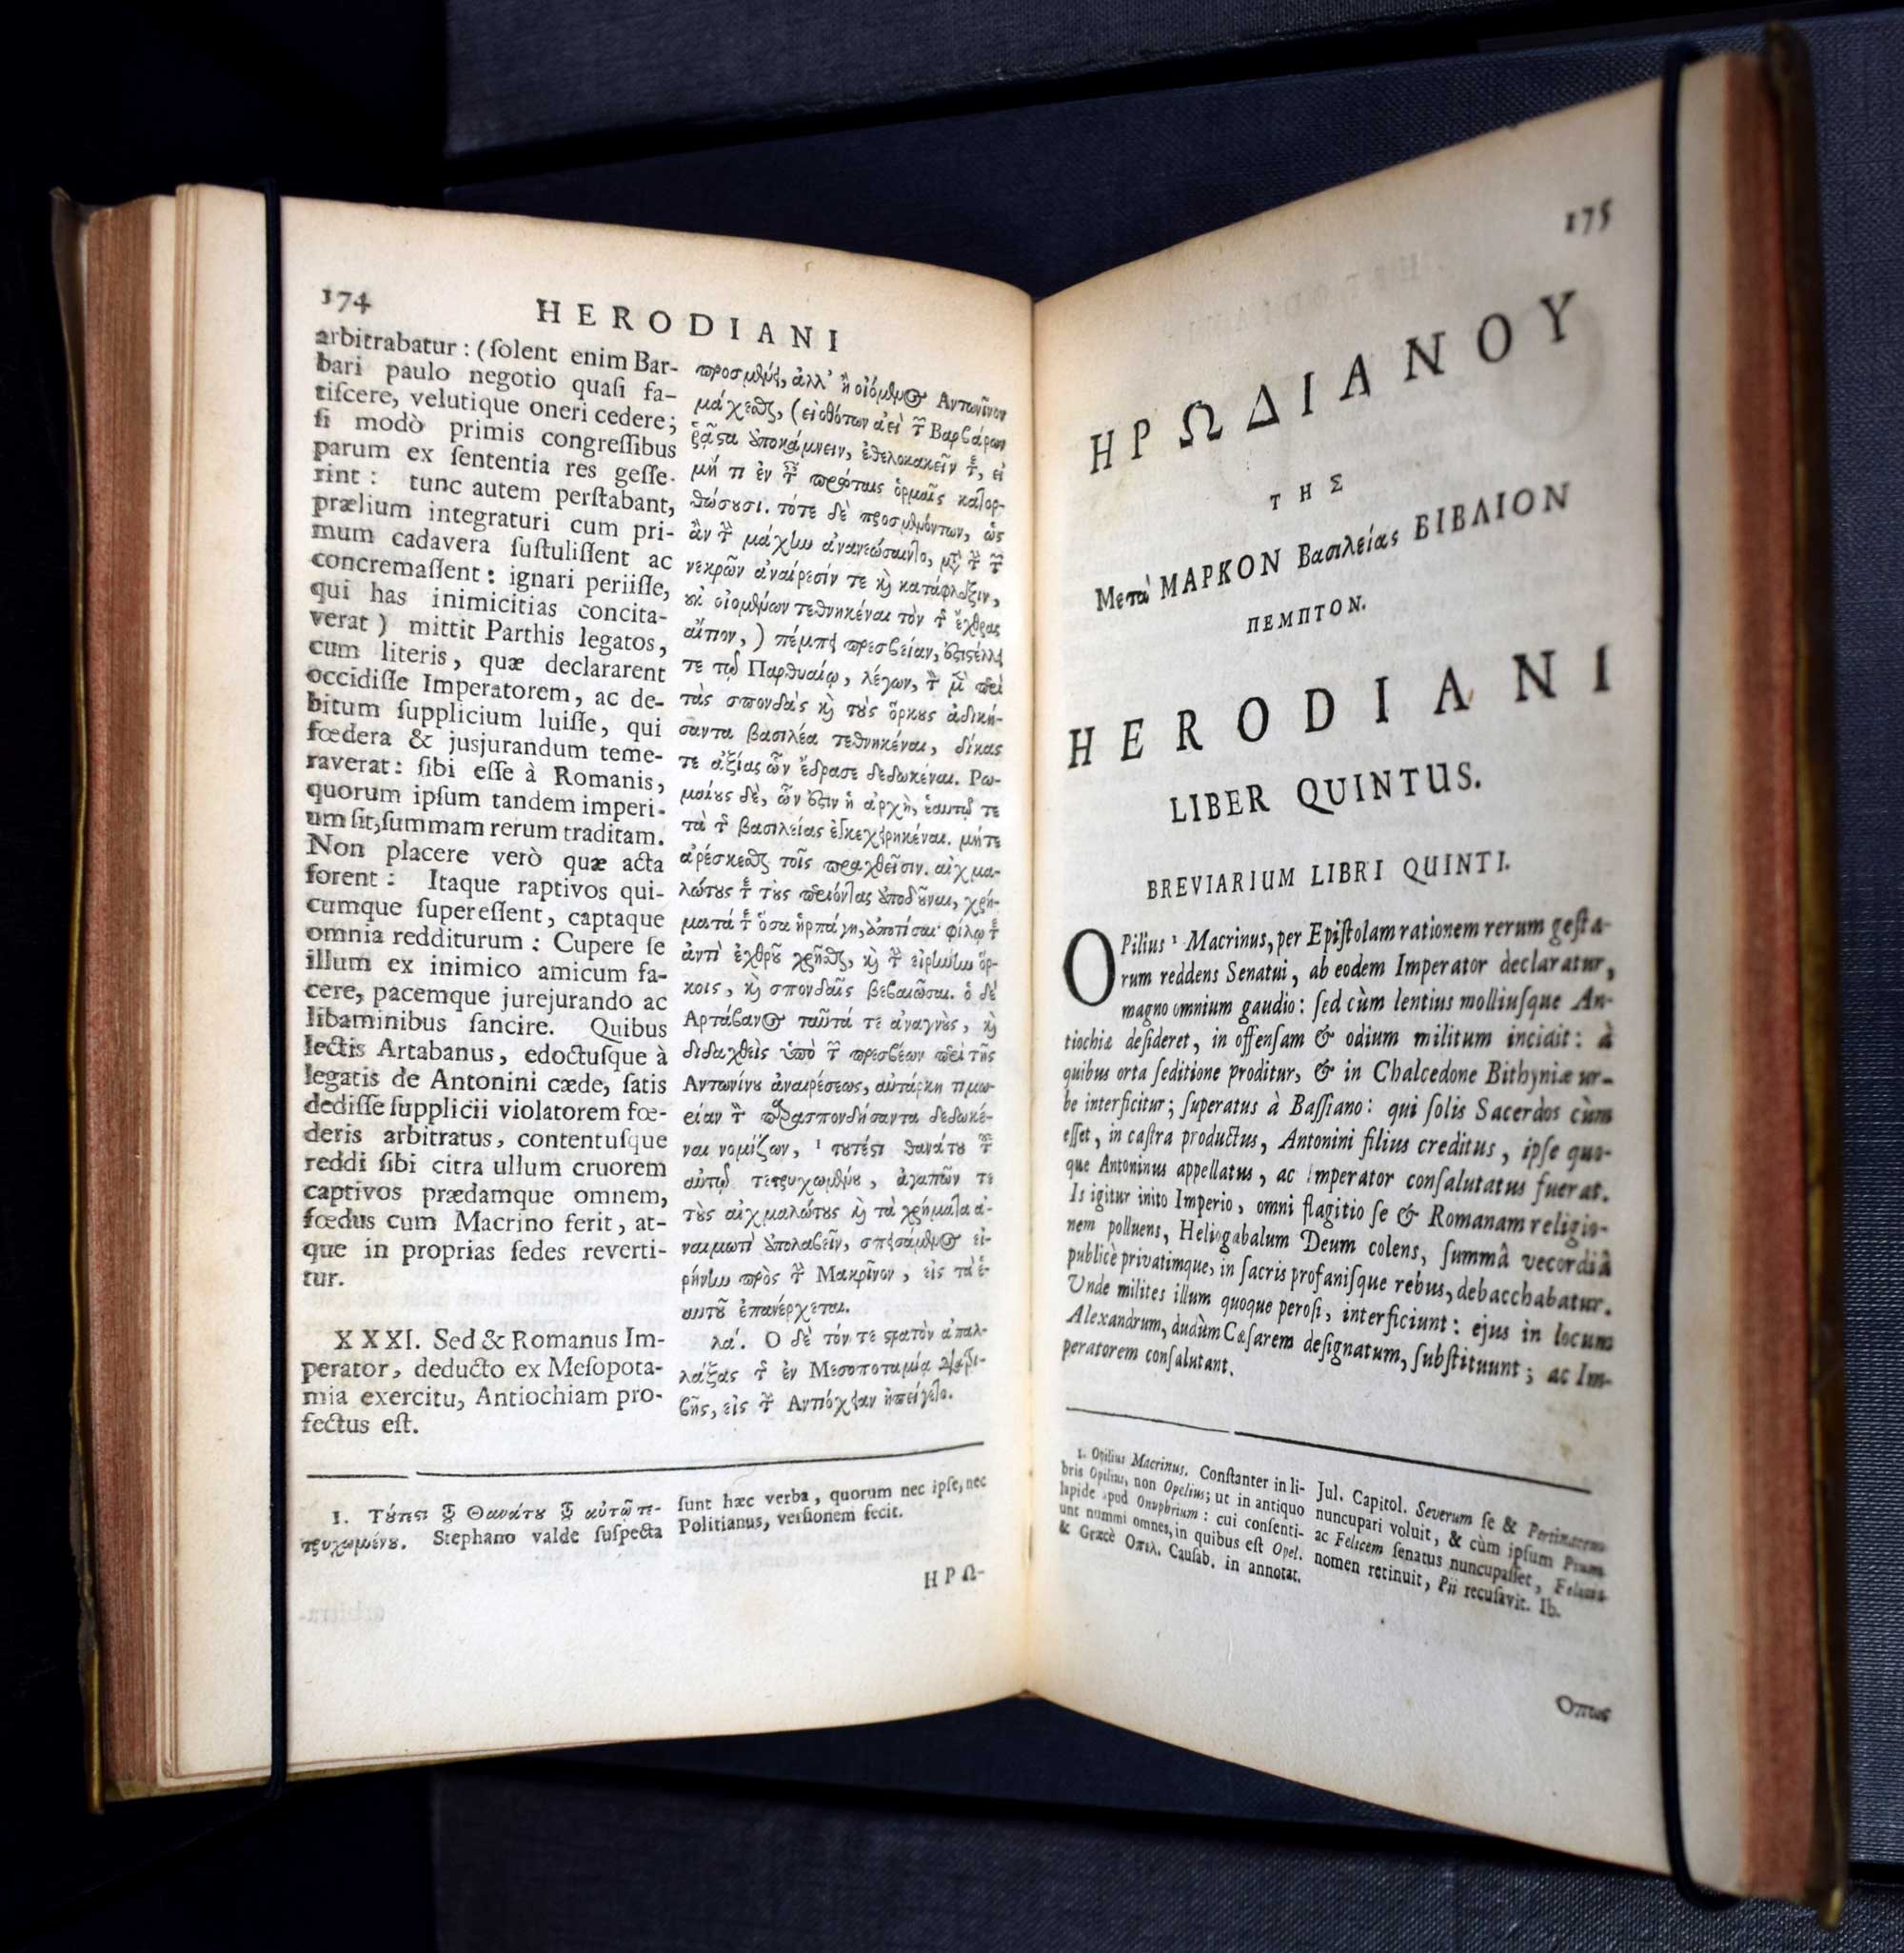 Erodianou Istorion Biblia 8. Herofdianai Historiarum Libri 8. Recogniti & Notis Illustrati.